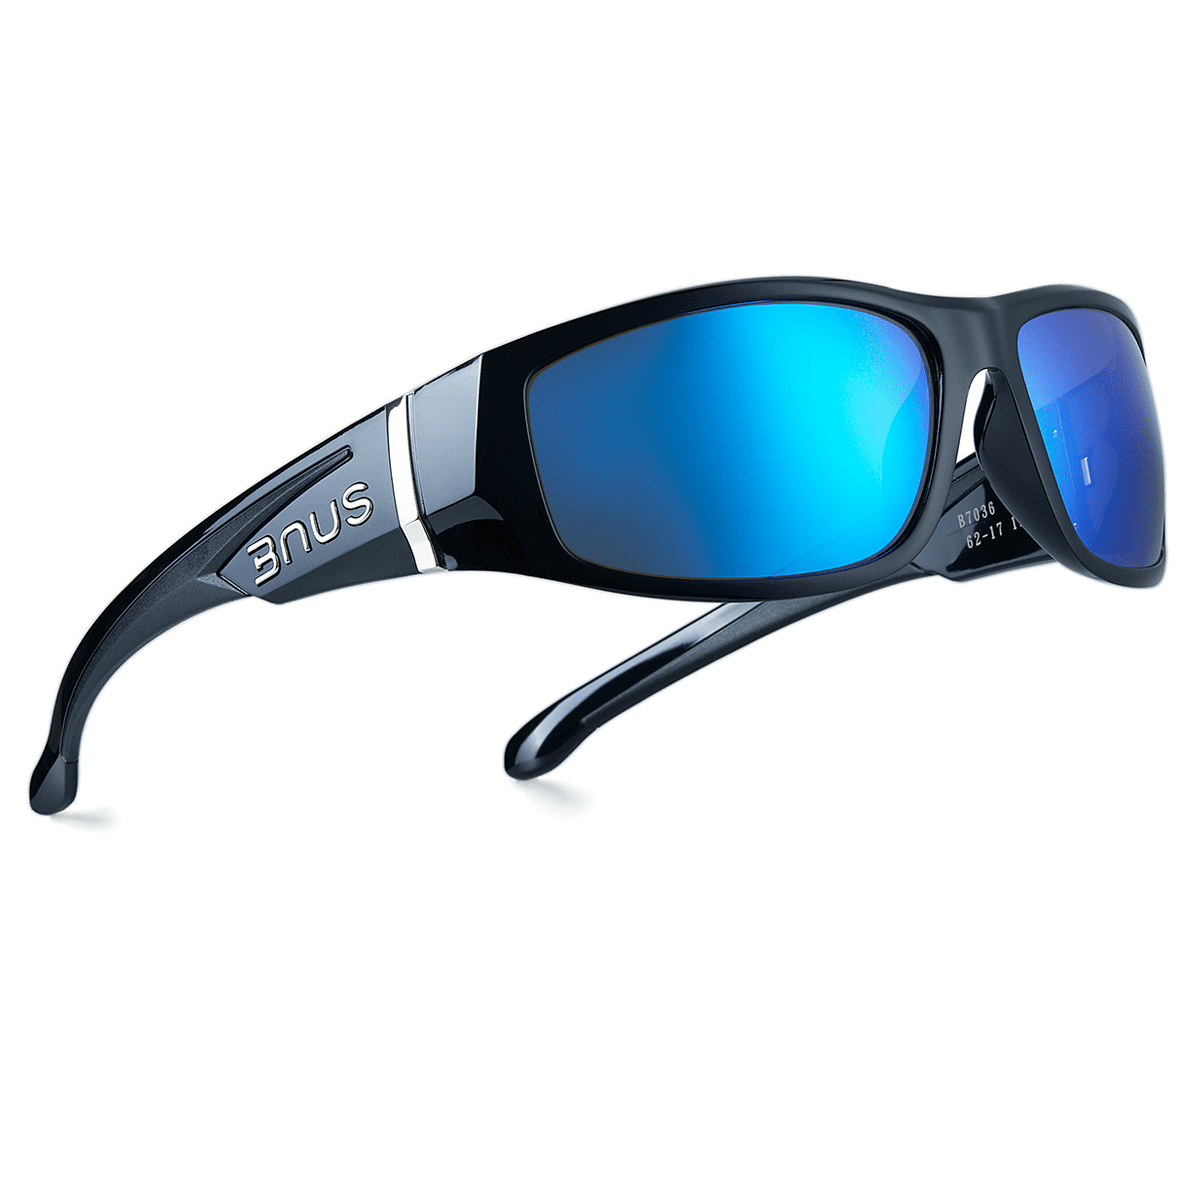 B.N.U.S Corning Glass Lens Polarized Sunglasses for Men Women Spring Hinges Shades Green Flash, Adult Unisex, Size: One Size